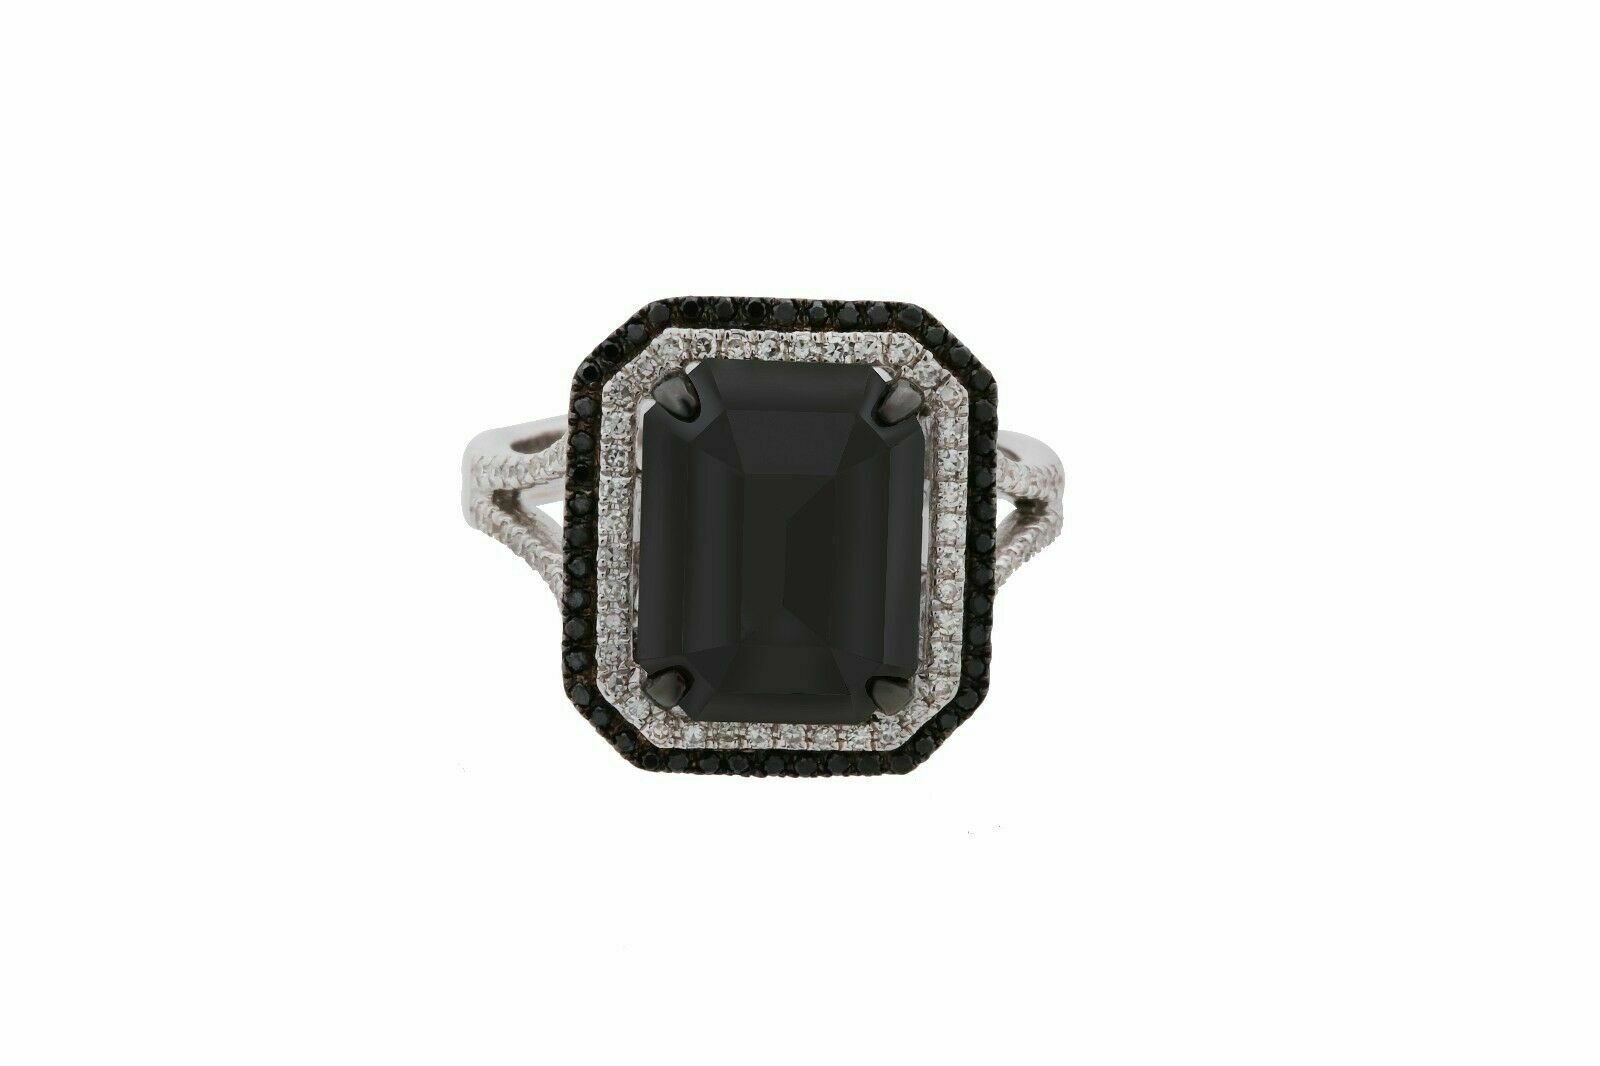 4.28 TCW Natural Radiant Cut Black & White Diamonds Ring Size 6.5 14k White Gold